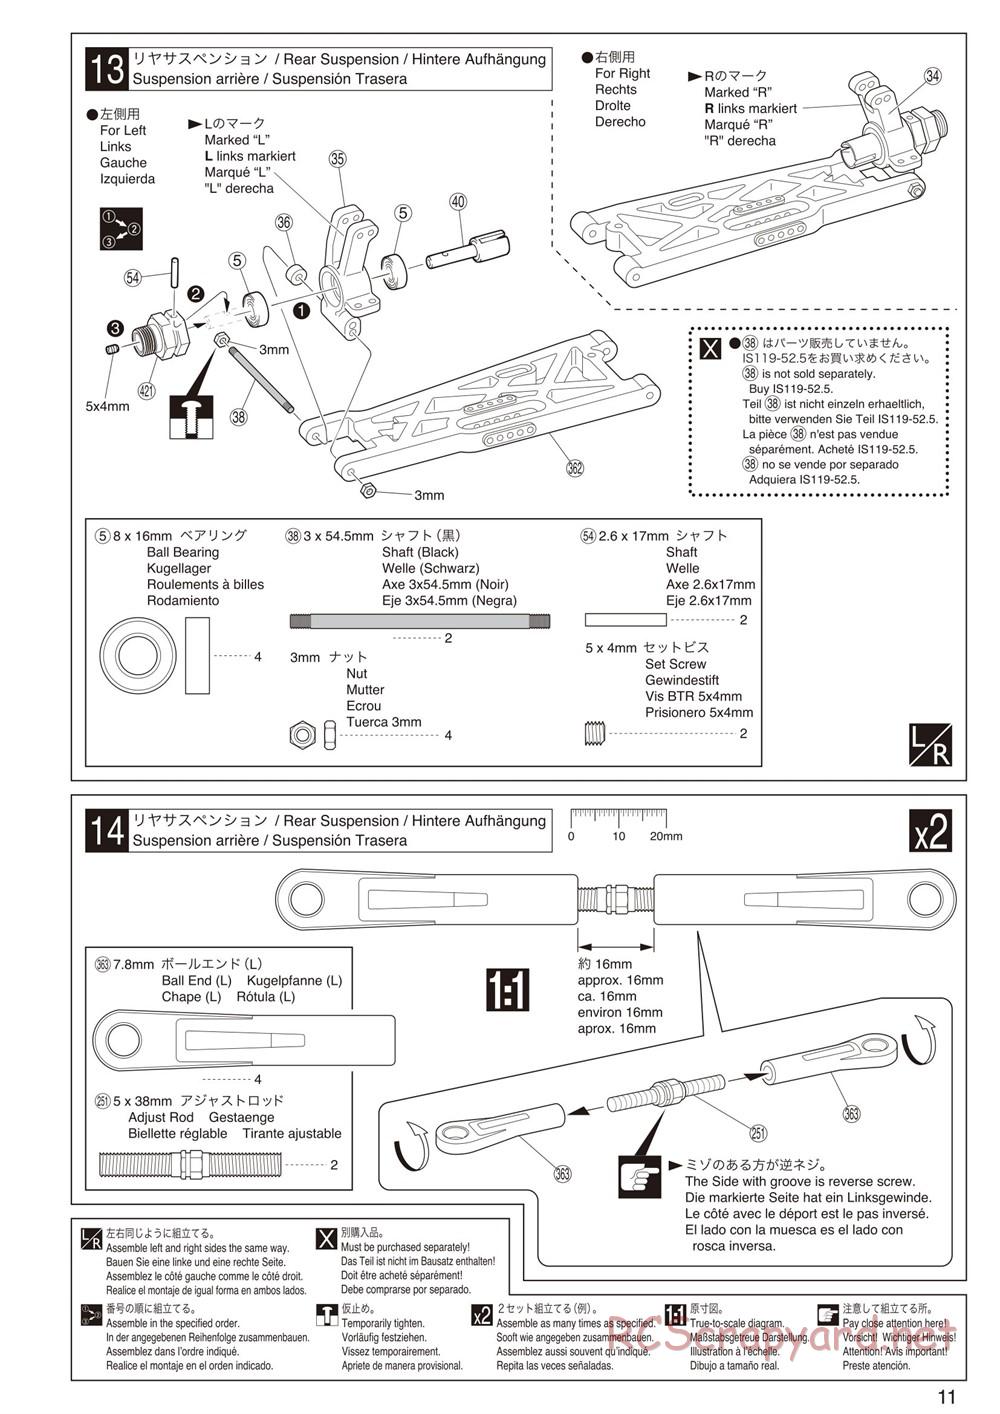 Kyosho - Inferno NEO ST Race Spec - Manual - Page 11